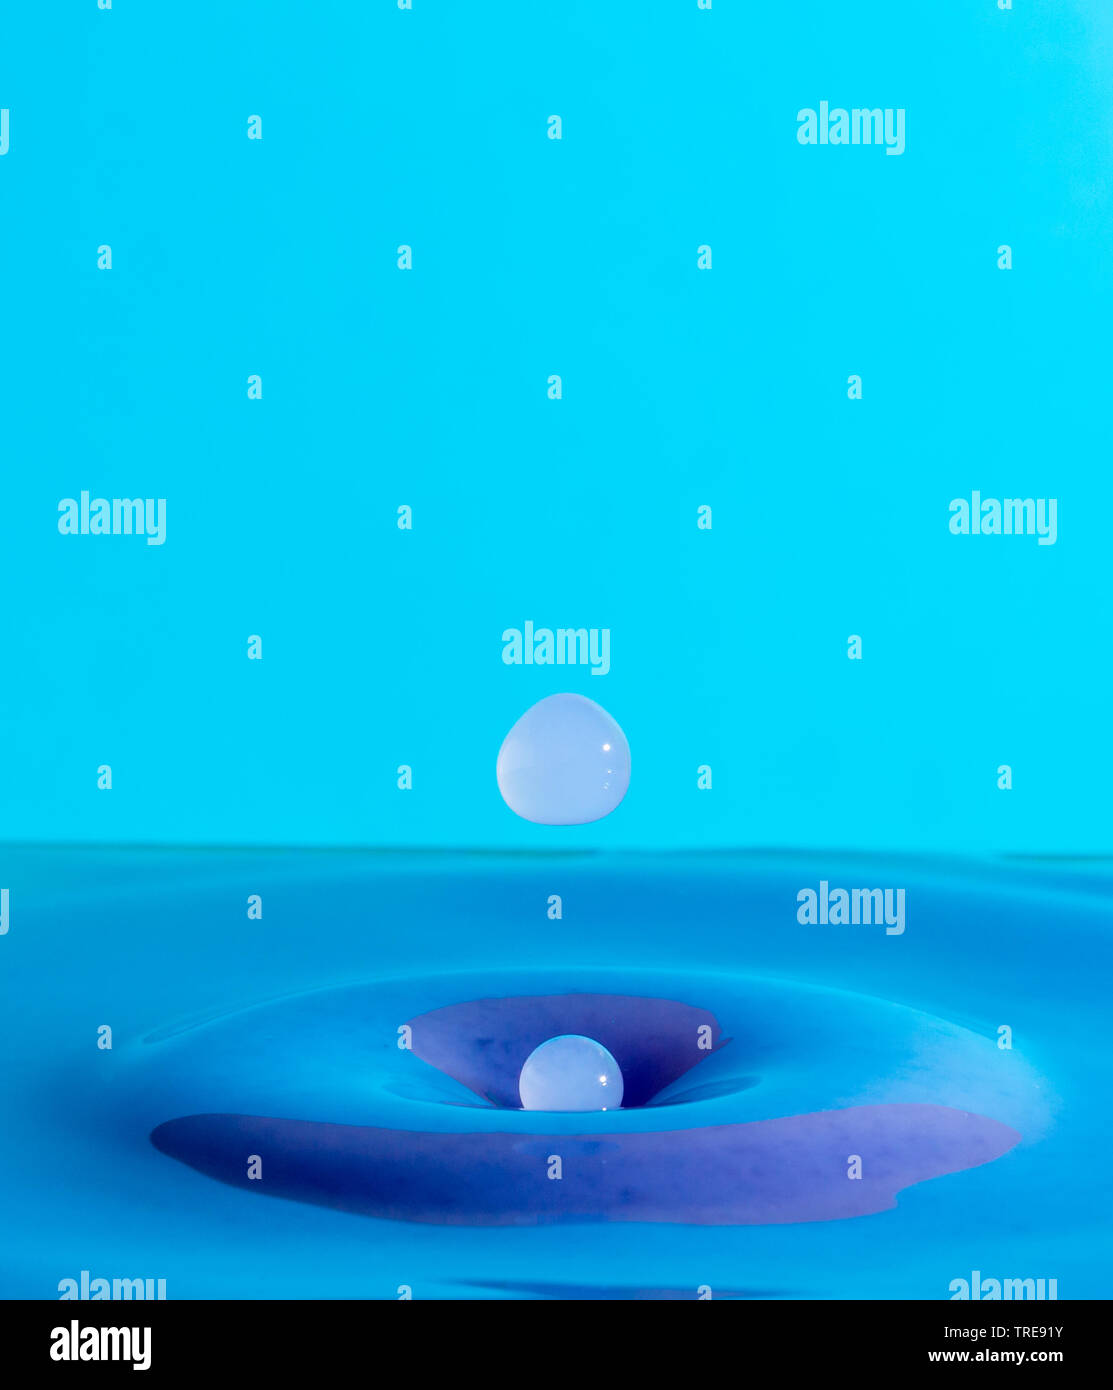 Cartoon Water Drop Animation On Green Stock Footage Video (100%  Royalty-free) 1105420677 | Shutterstock